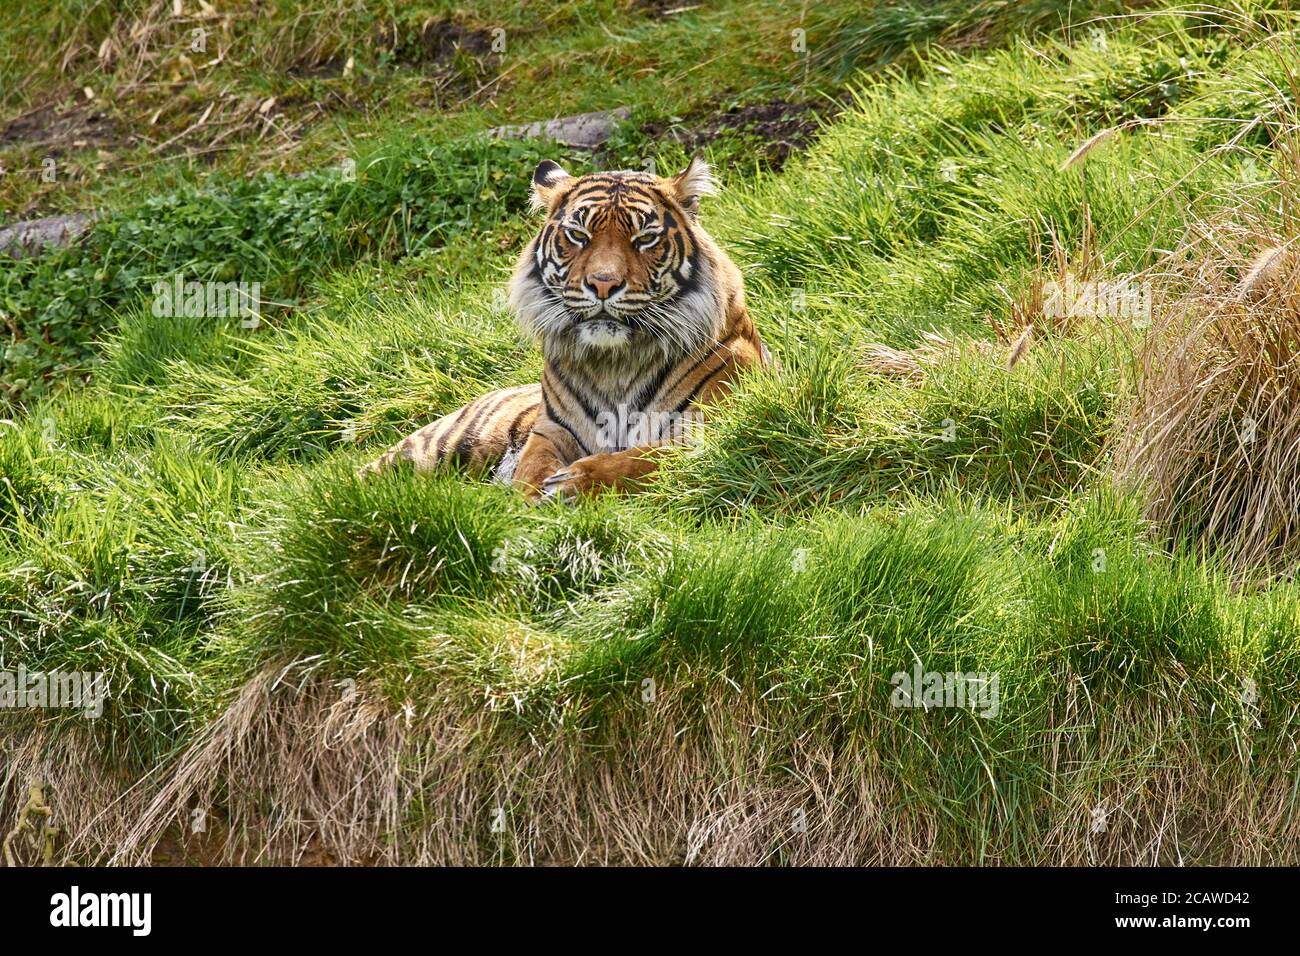 tiger in captivity Stock Photo